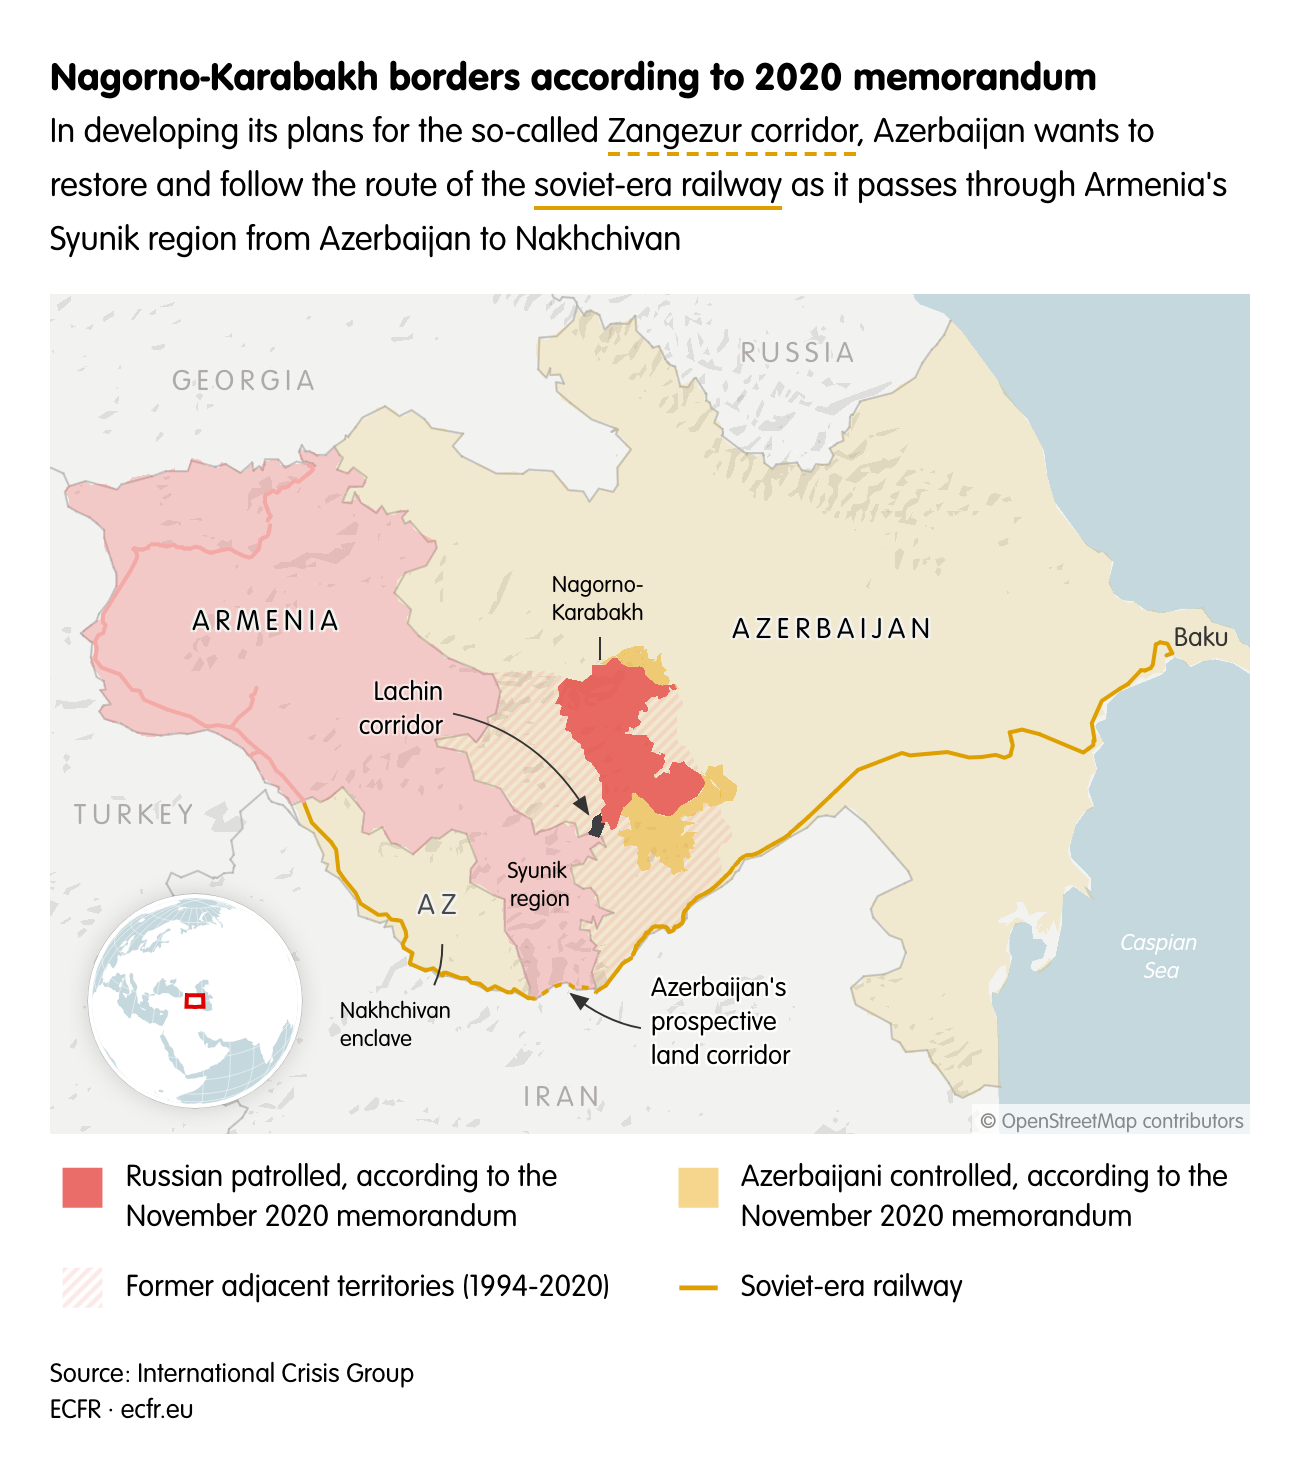 Nagorno-Karabakh borders according to 2020 memorandum